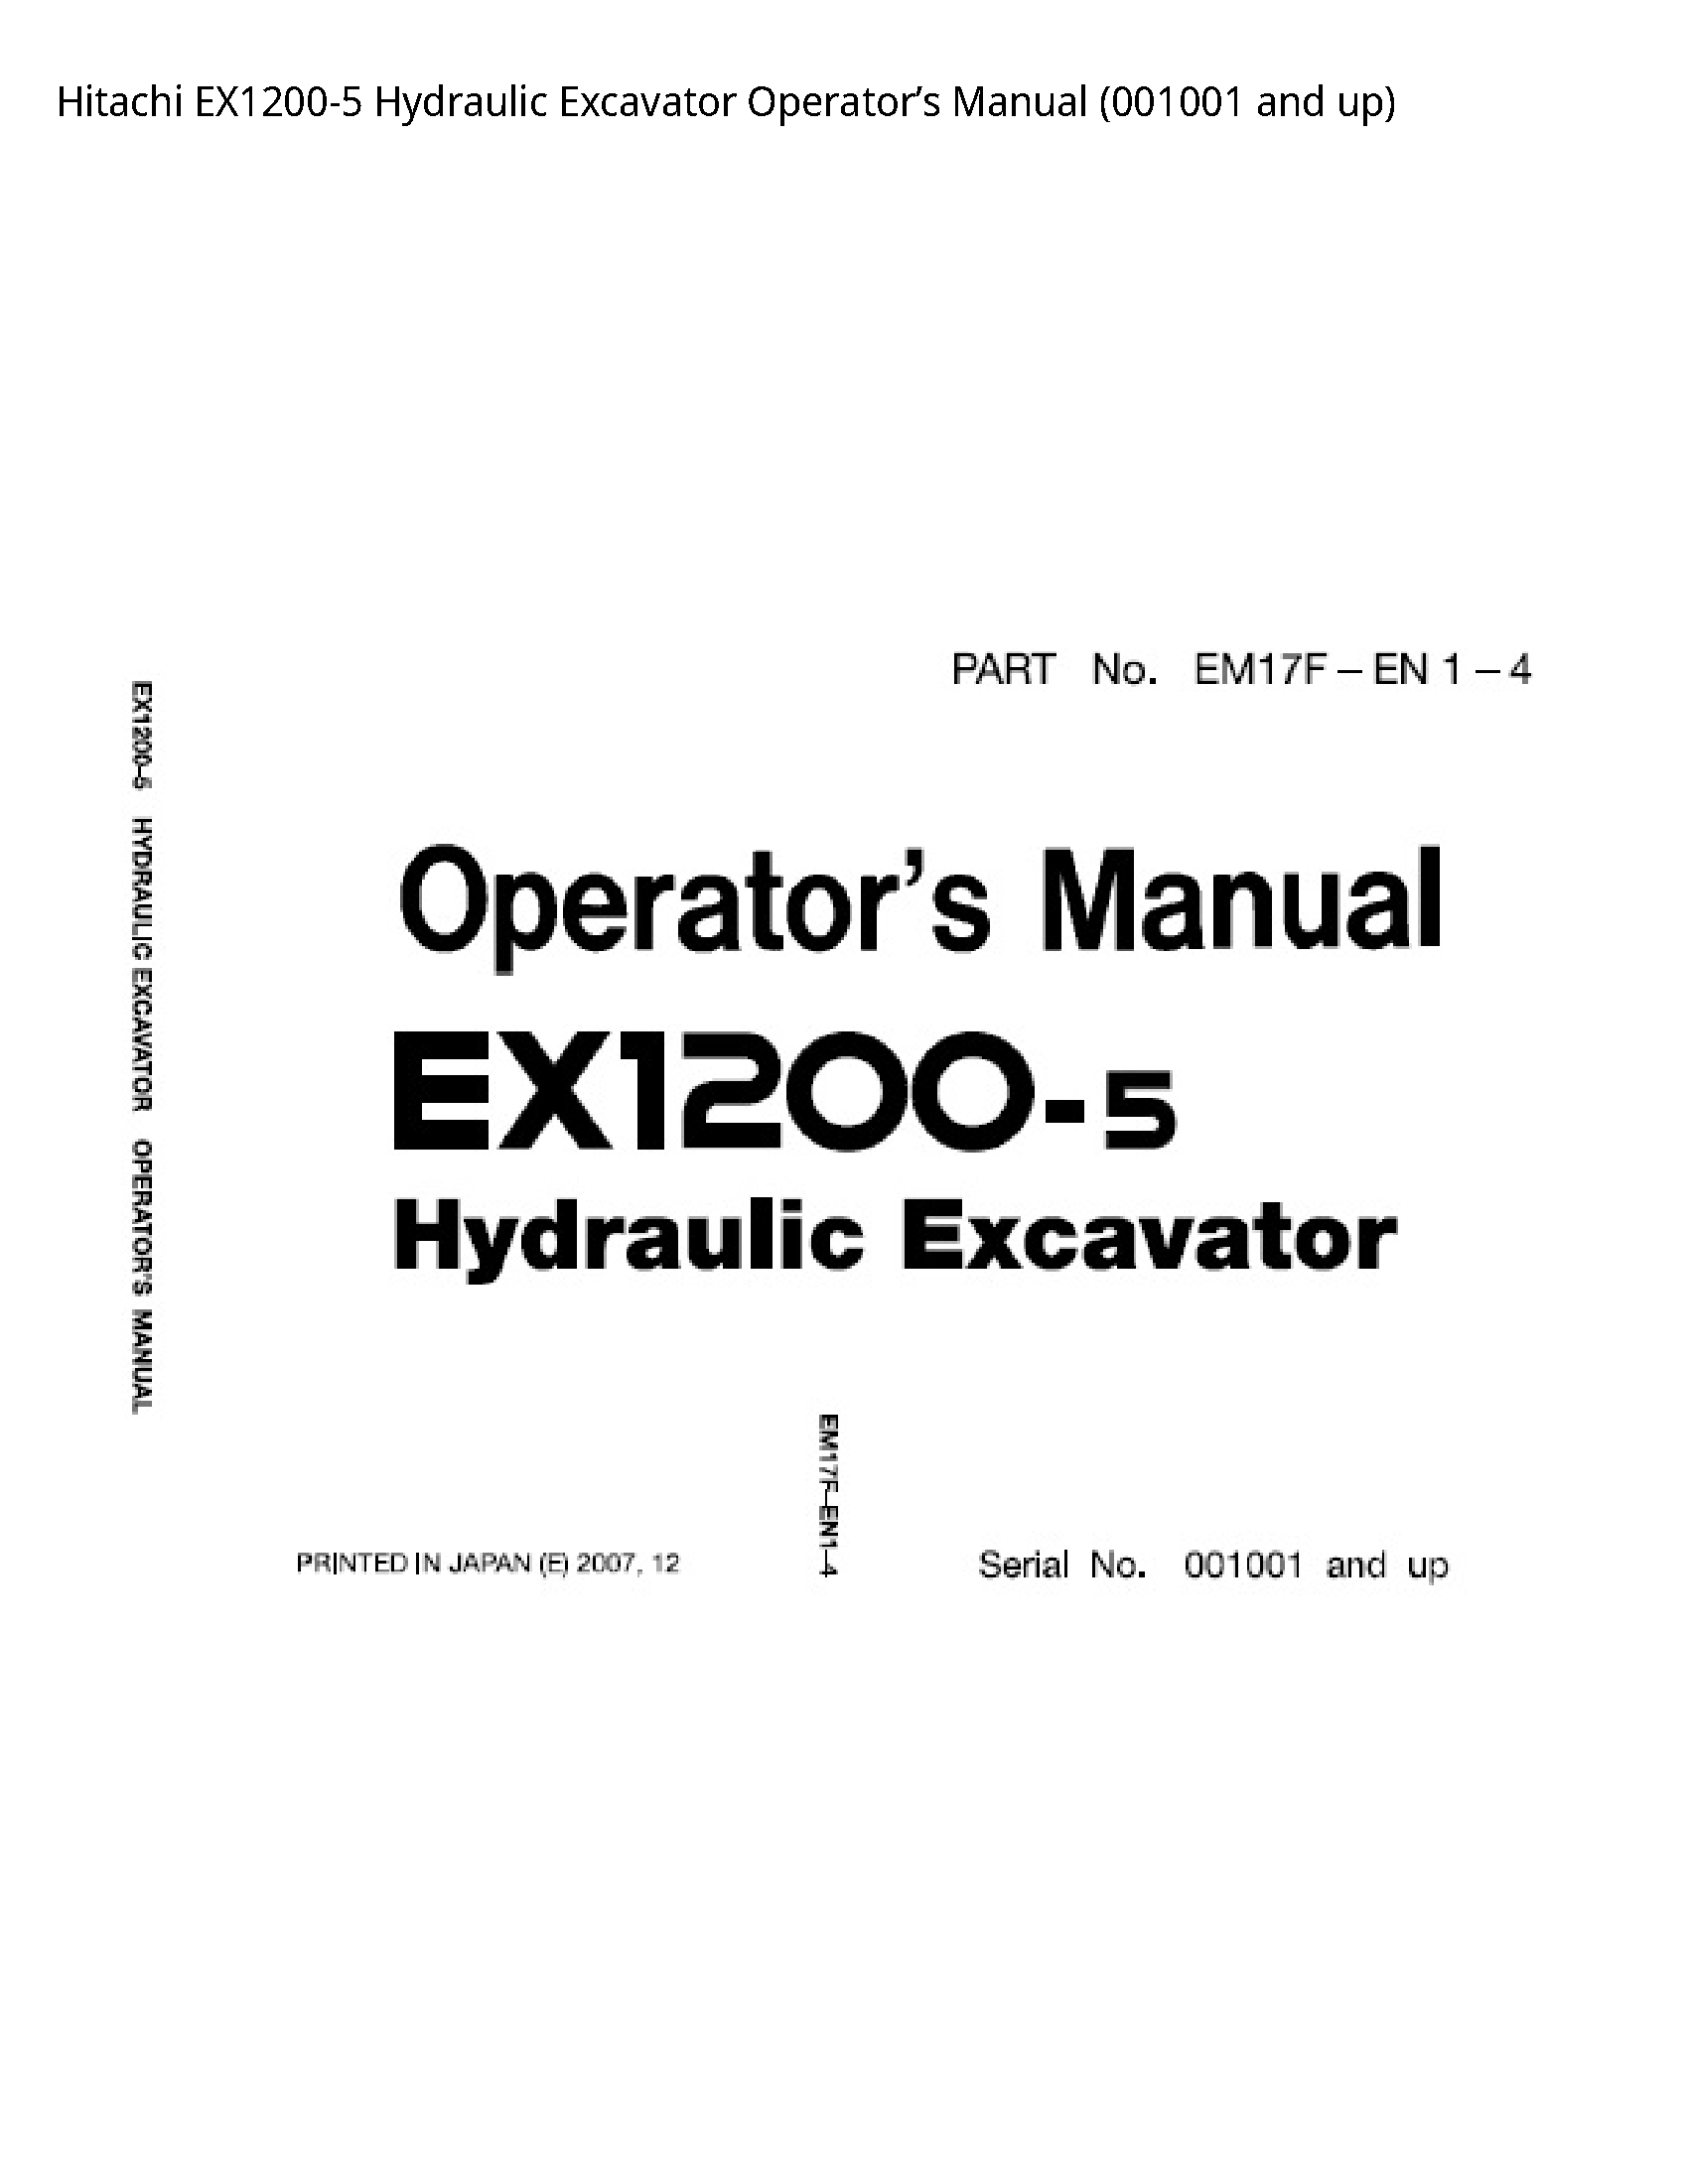 Hitachi EX1200-5 Hydraulic Excavator Operator’s manual